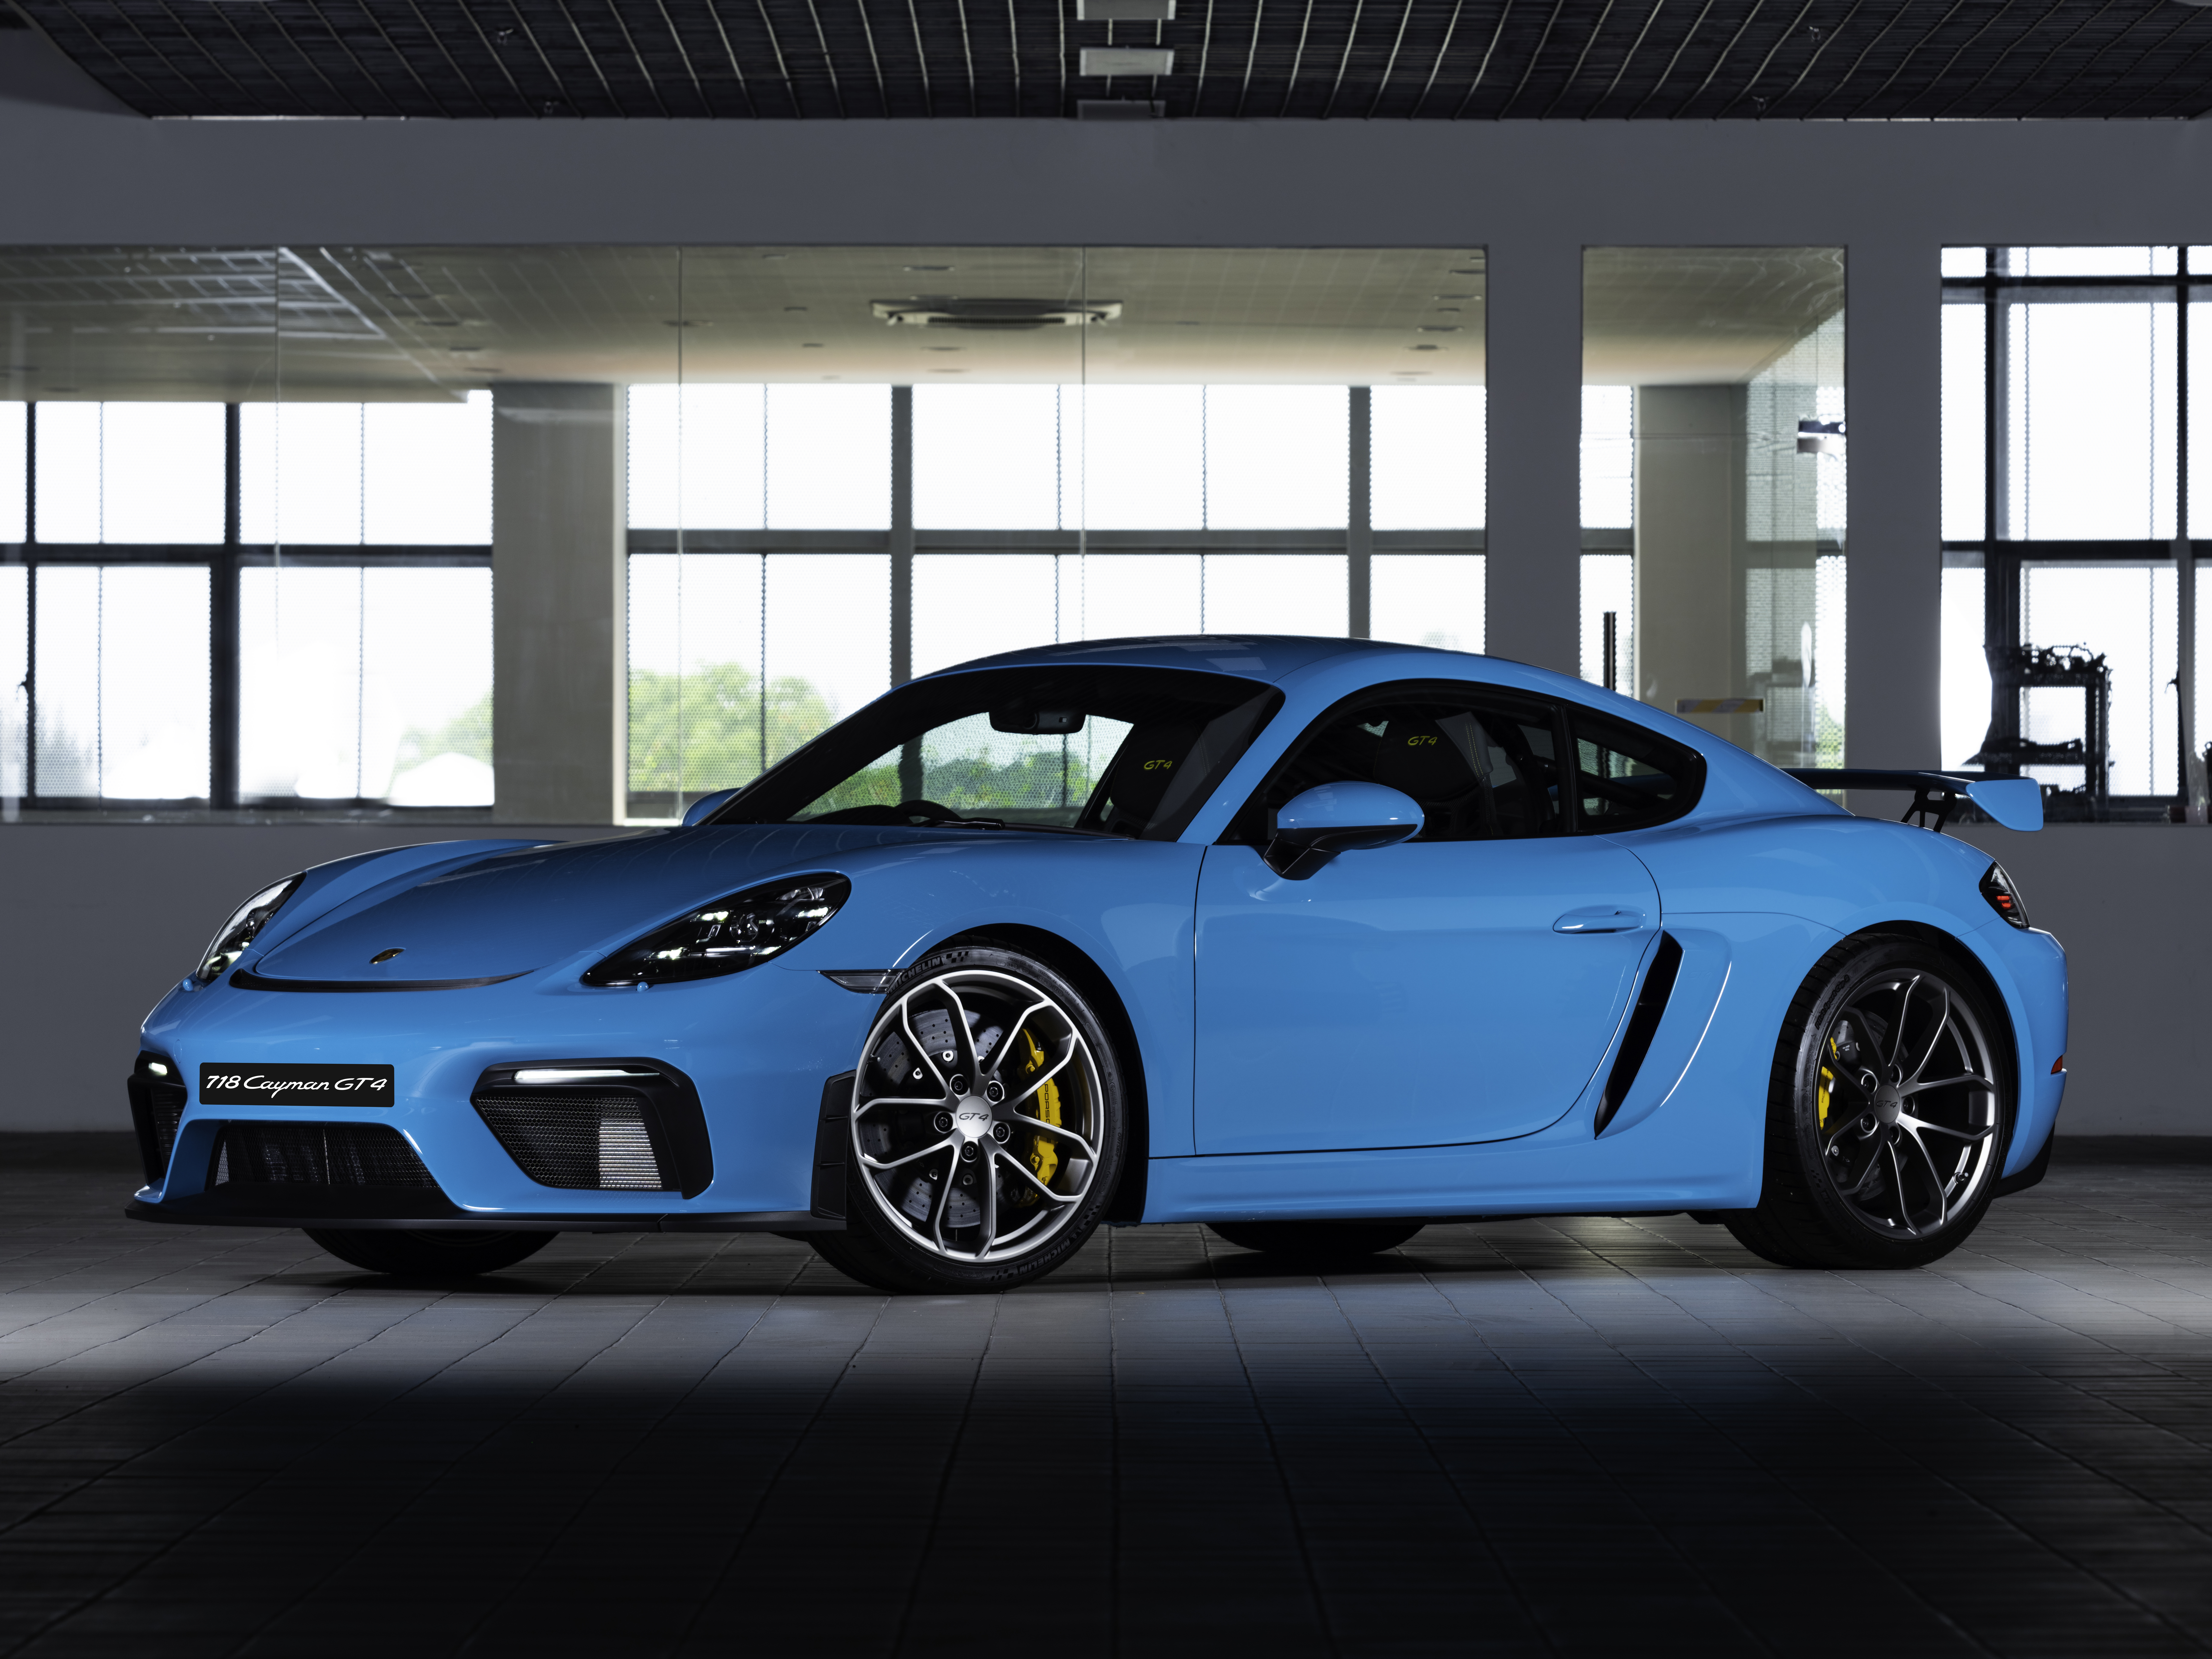 2020 Porsche 718 Spyder 和 Cayman GT4 本地上市！搭载4.0L水平对卧引擎，可榨出420 PS马力，售RM970k起 Image #128356